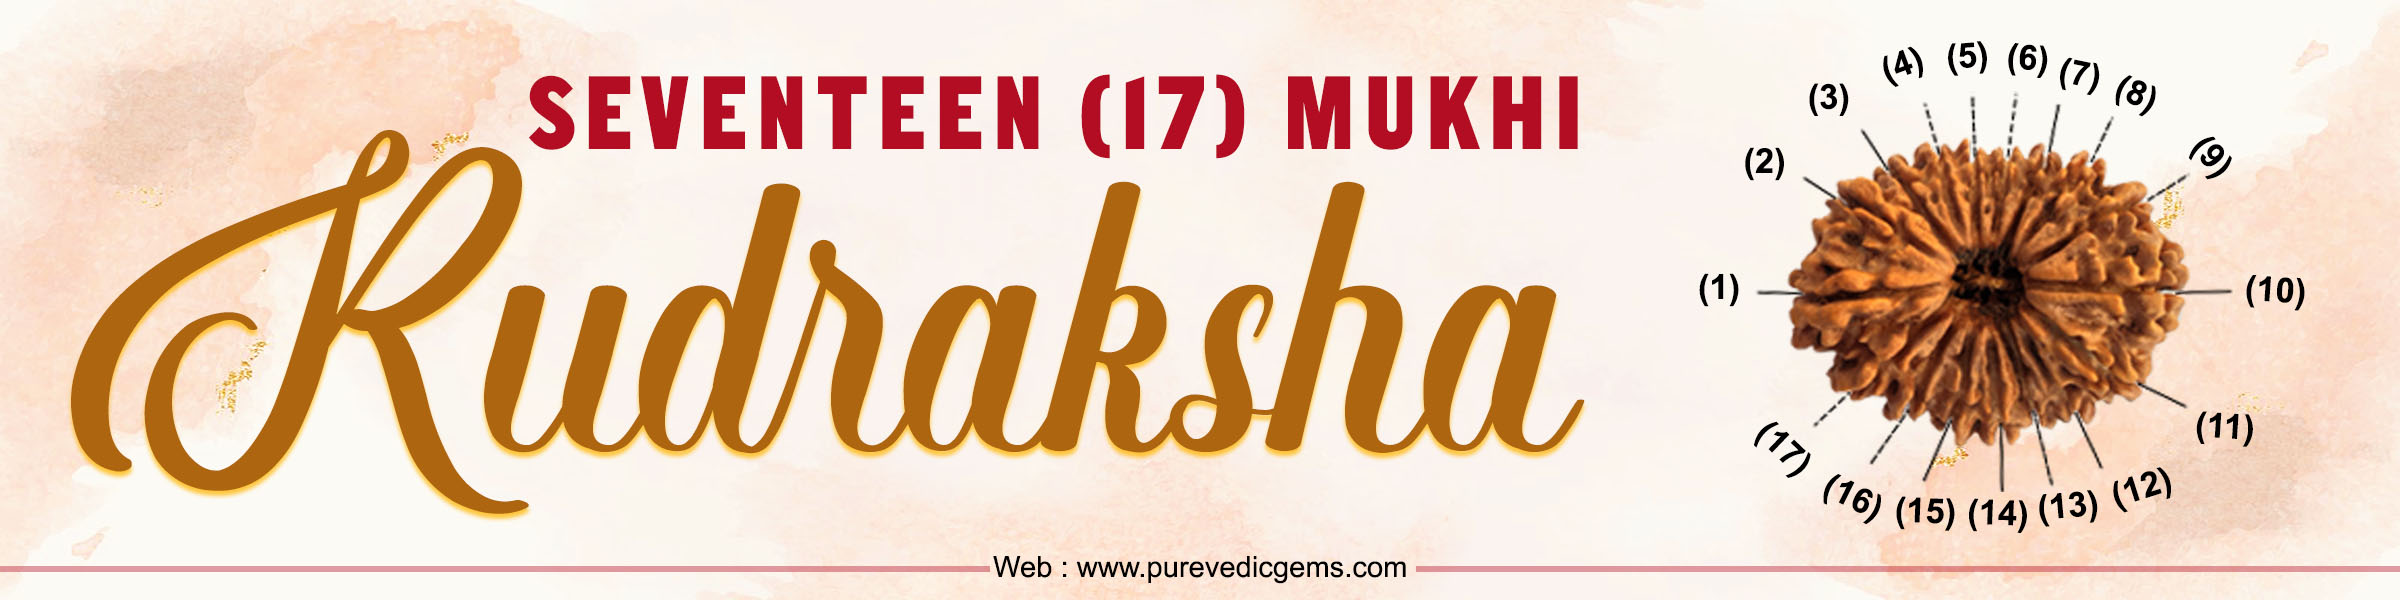 Seventeen Mukhi Rudraksha